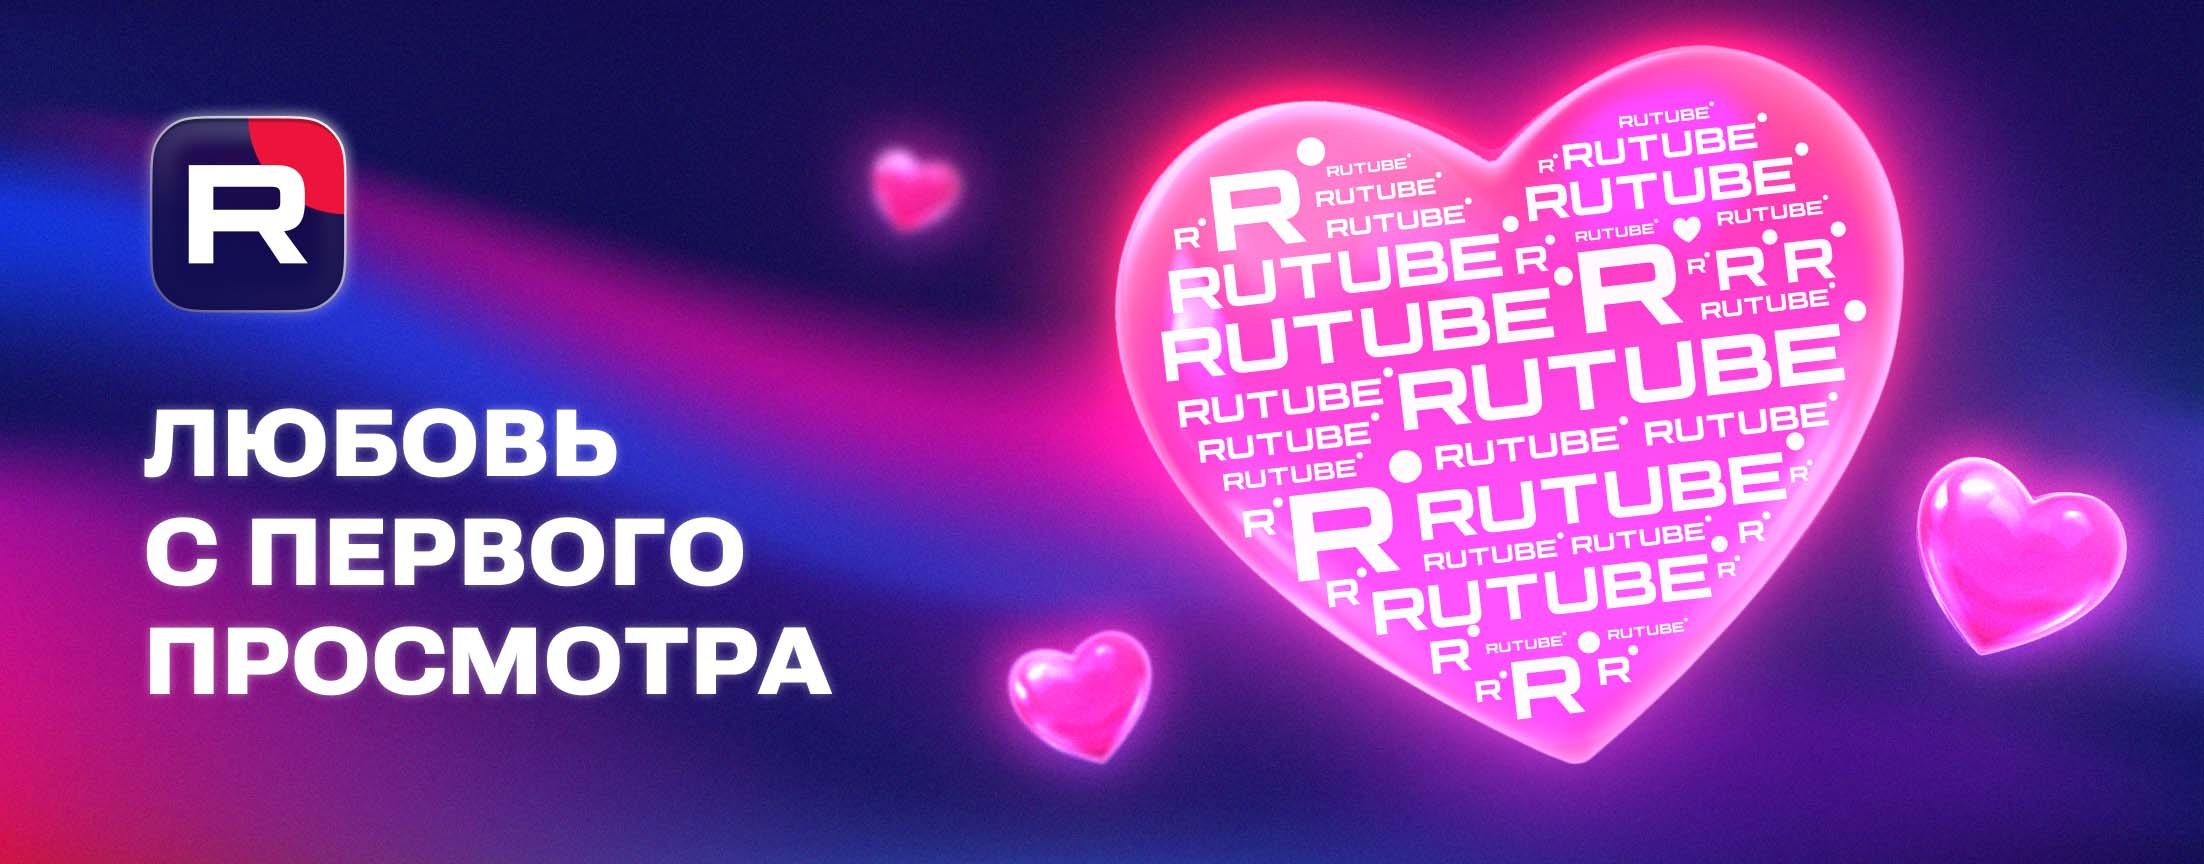 RUTUBE — это по любви